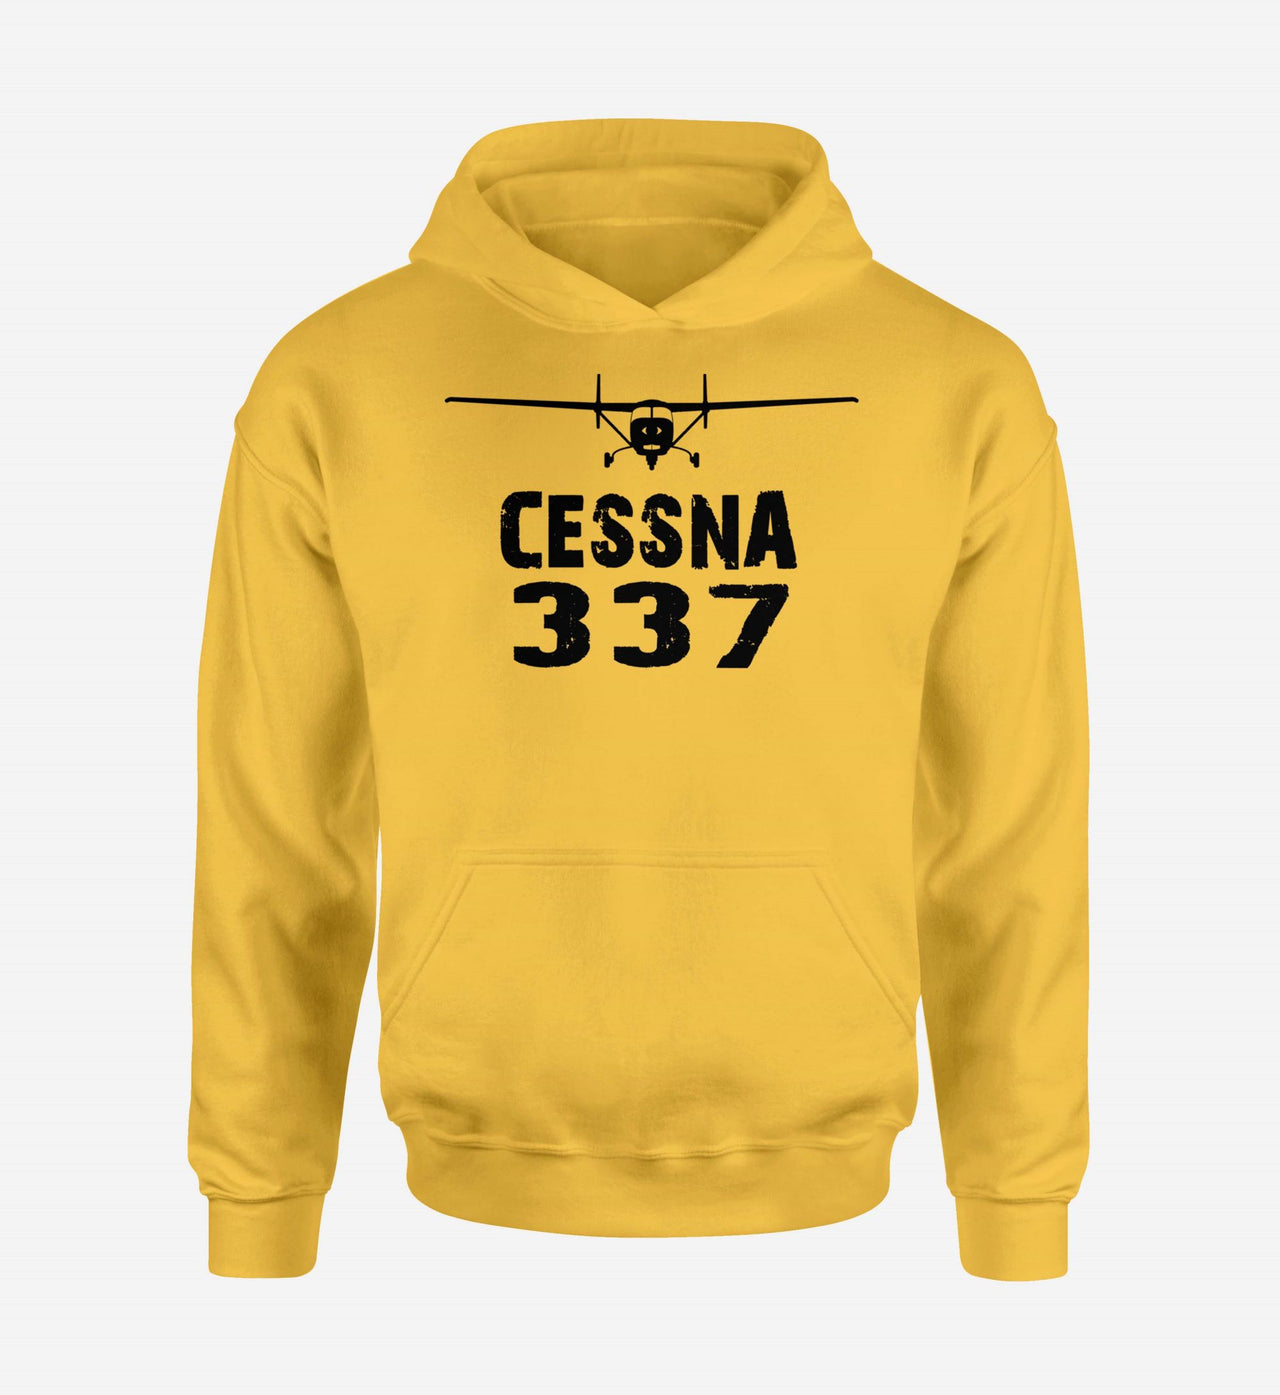 Cessna 337 & Plane Designed Hoodies